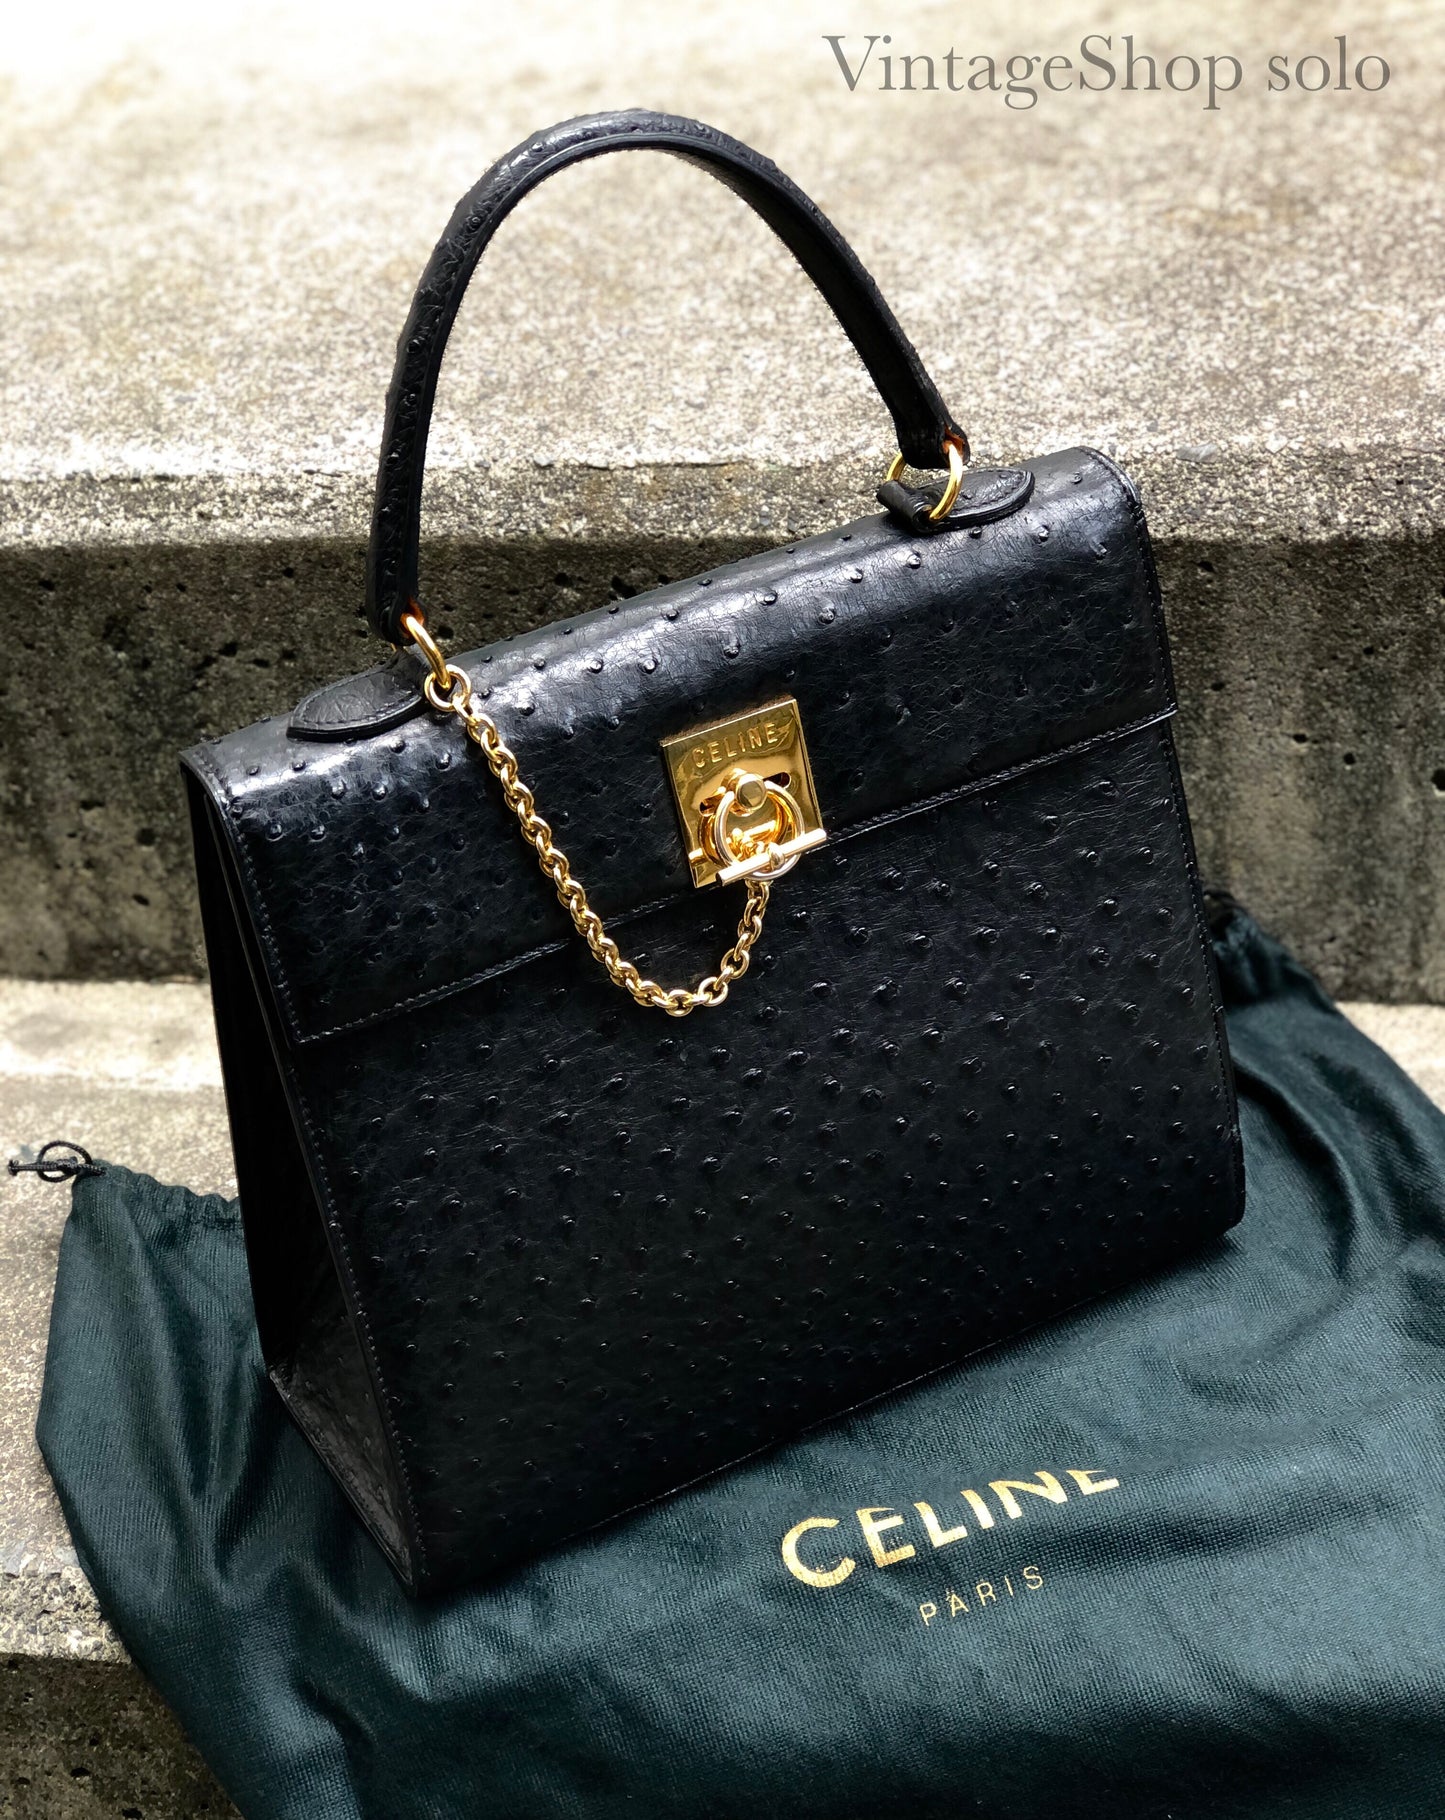 CELINE Mantel Chain Gancini Ostrich Leather Kelly Handbag Black Vintage Old CELINE auwsc2